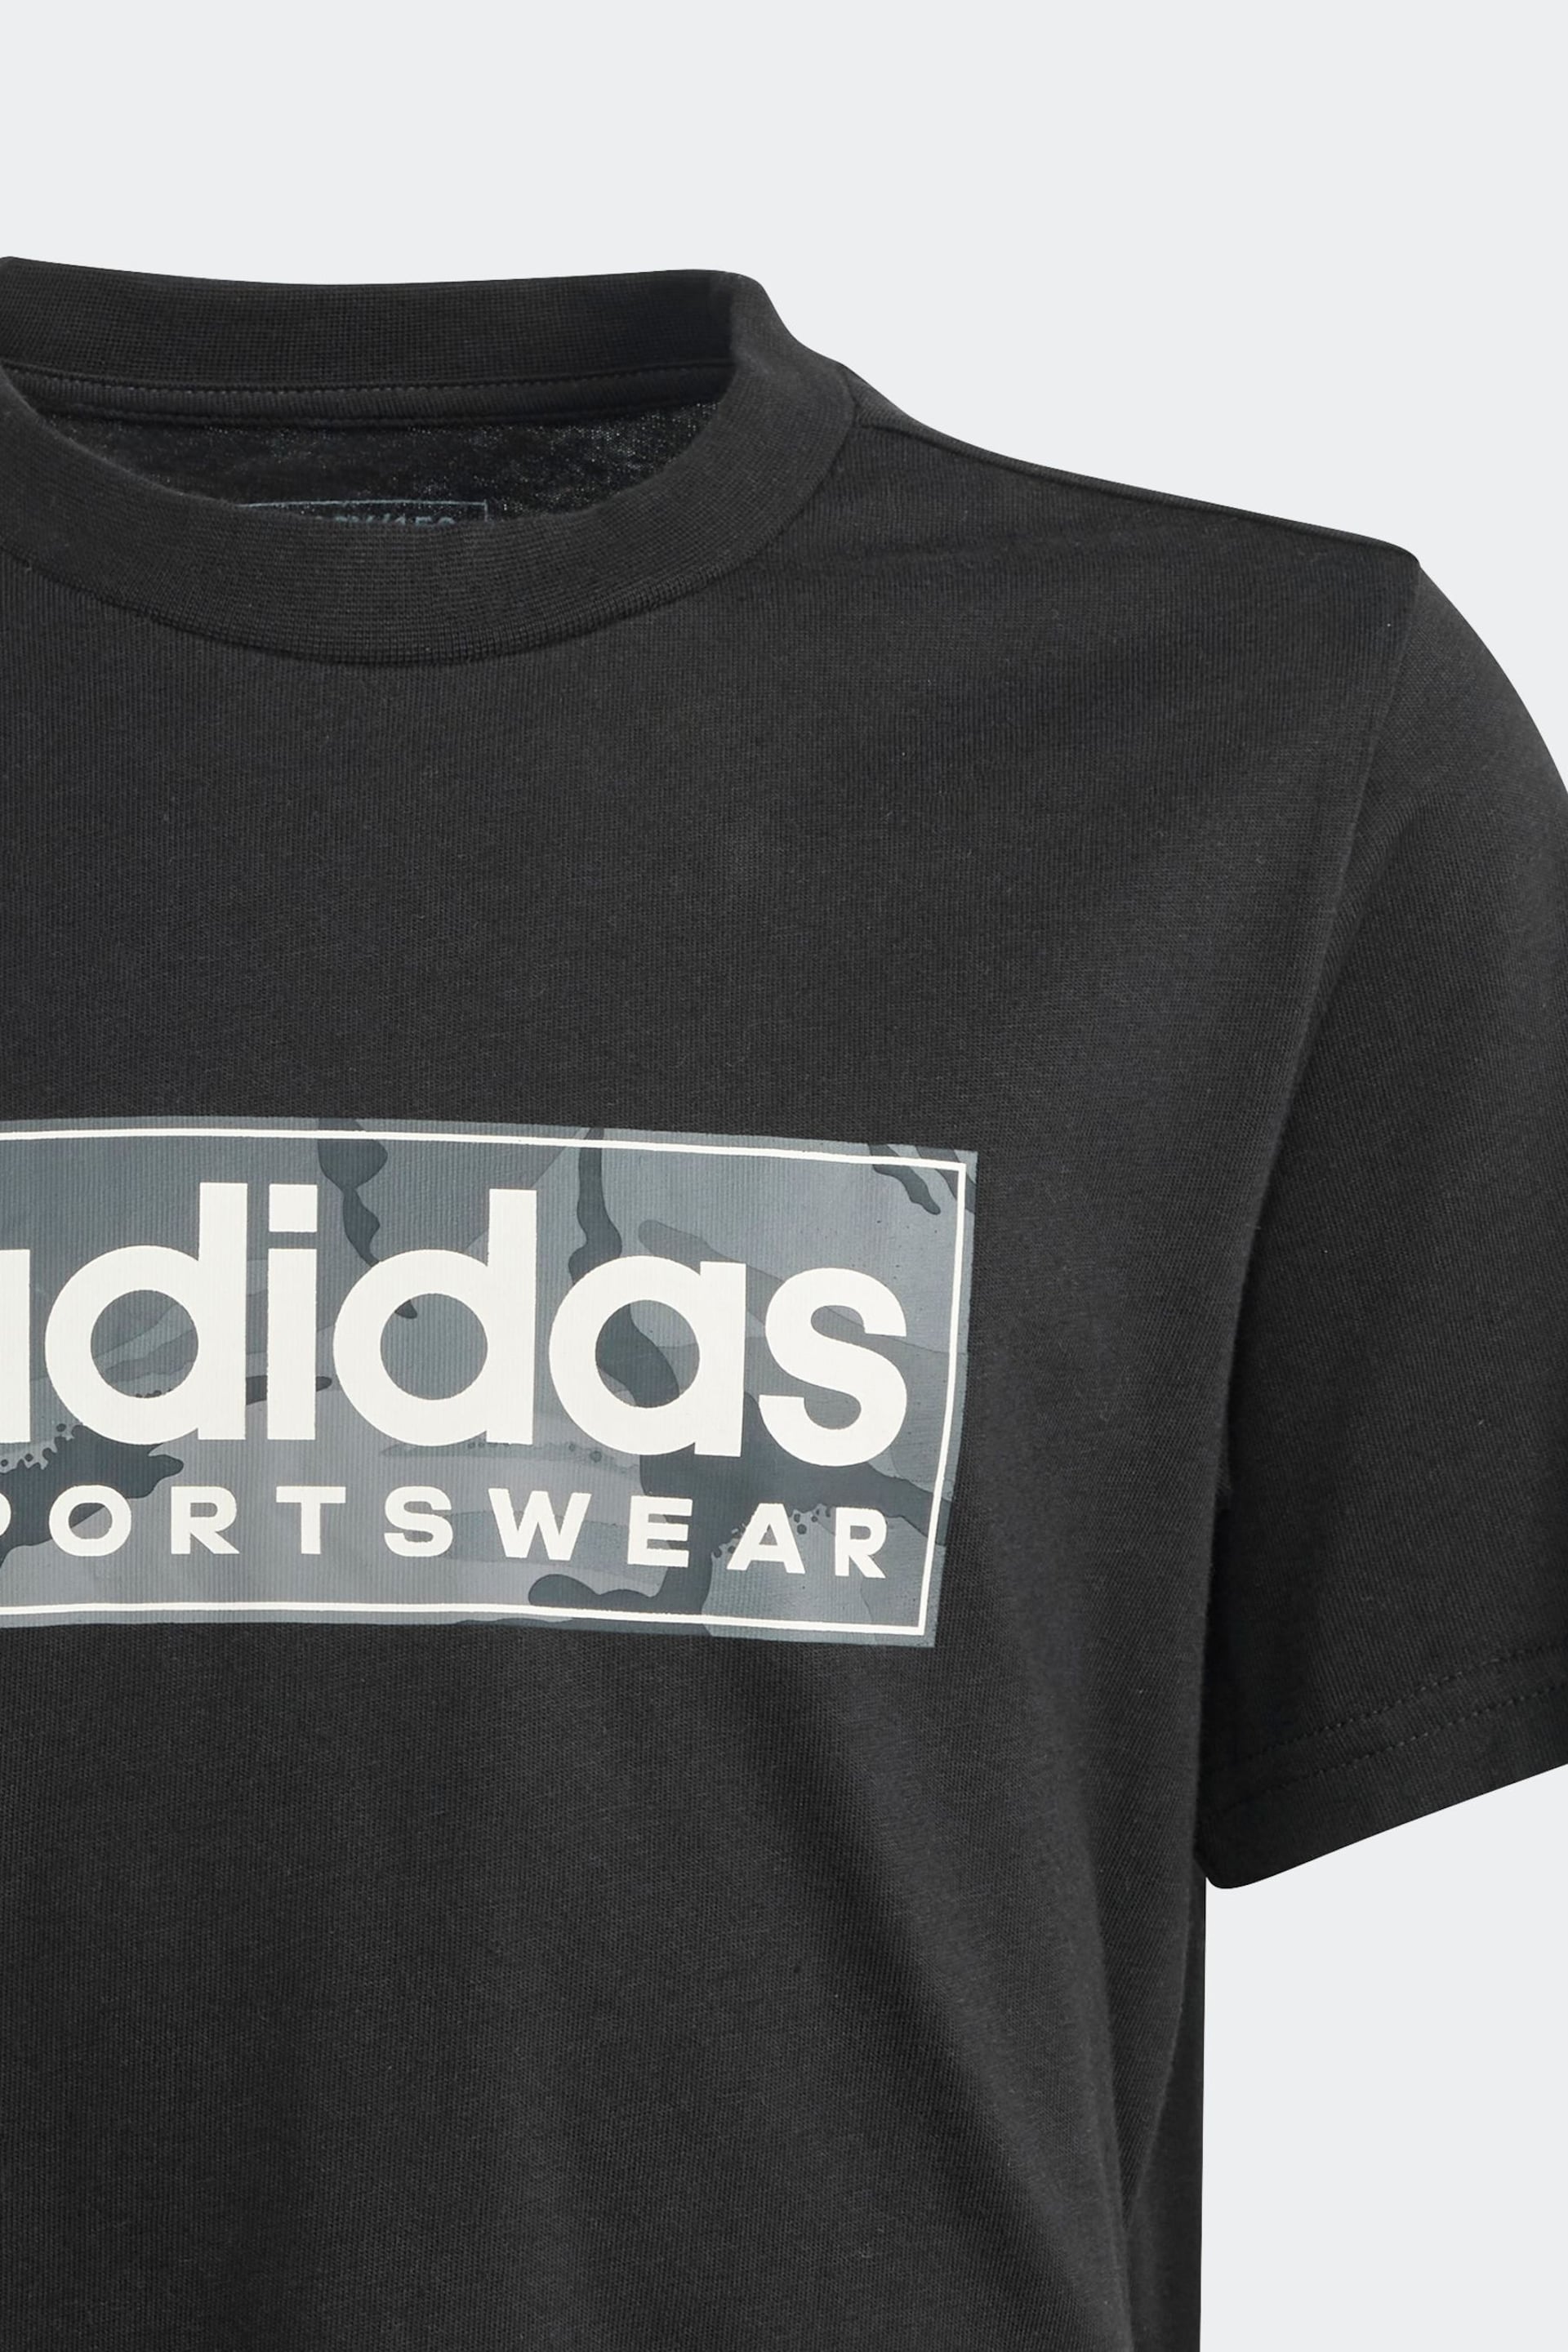 adidas Black Kids Sportswear Camo Linear Graphic T-Shirt - Image 3 of 5